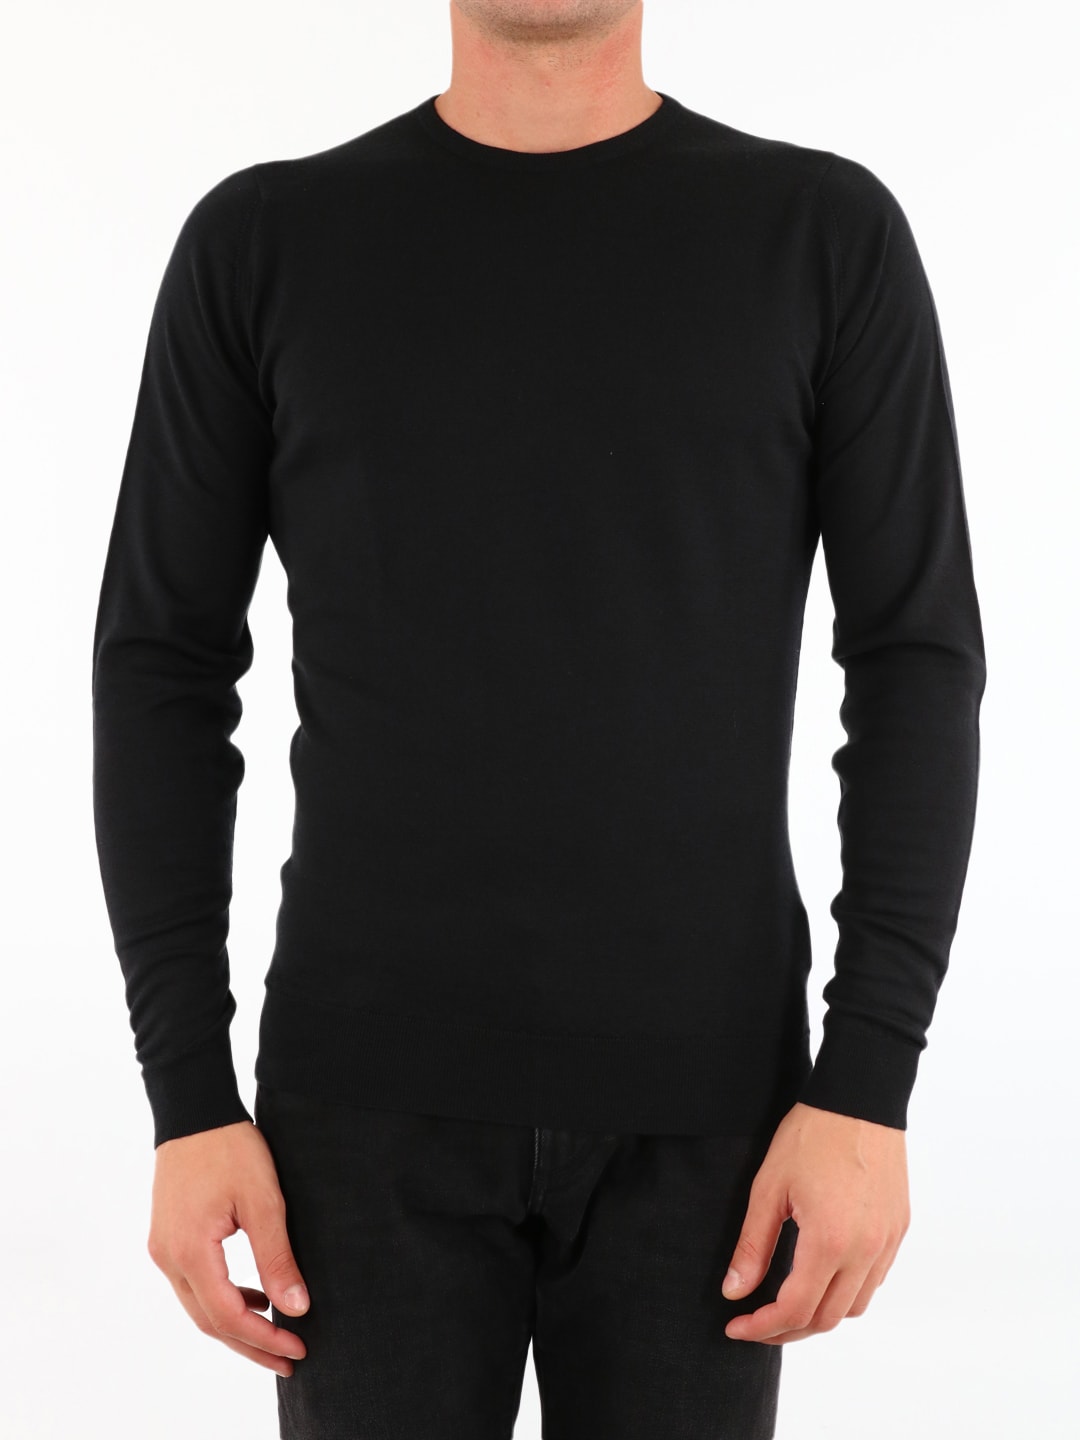 John Smedley Black Merino Wool Sweater